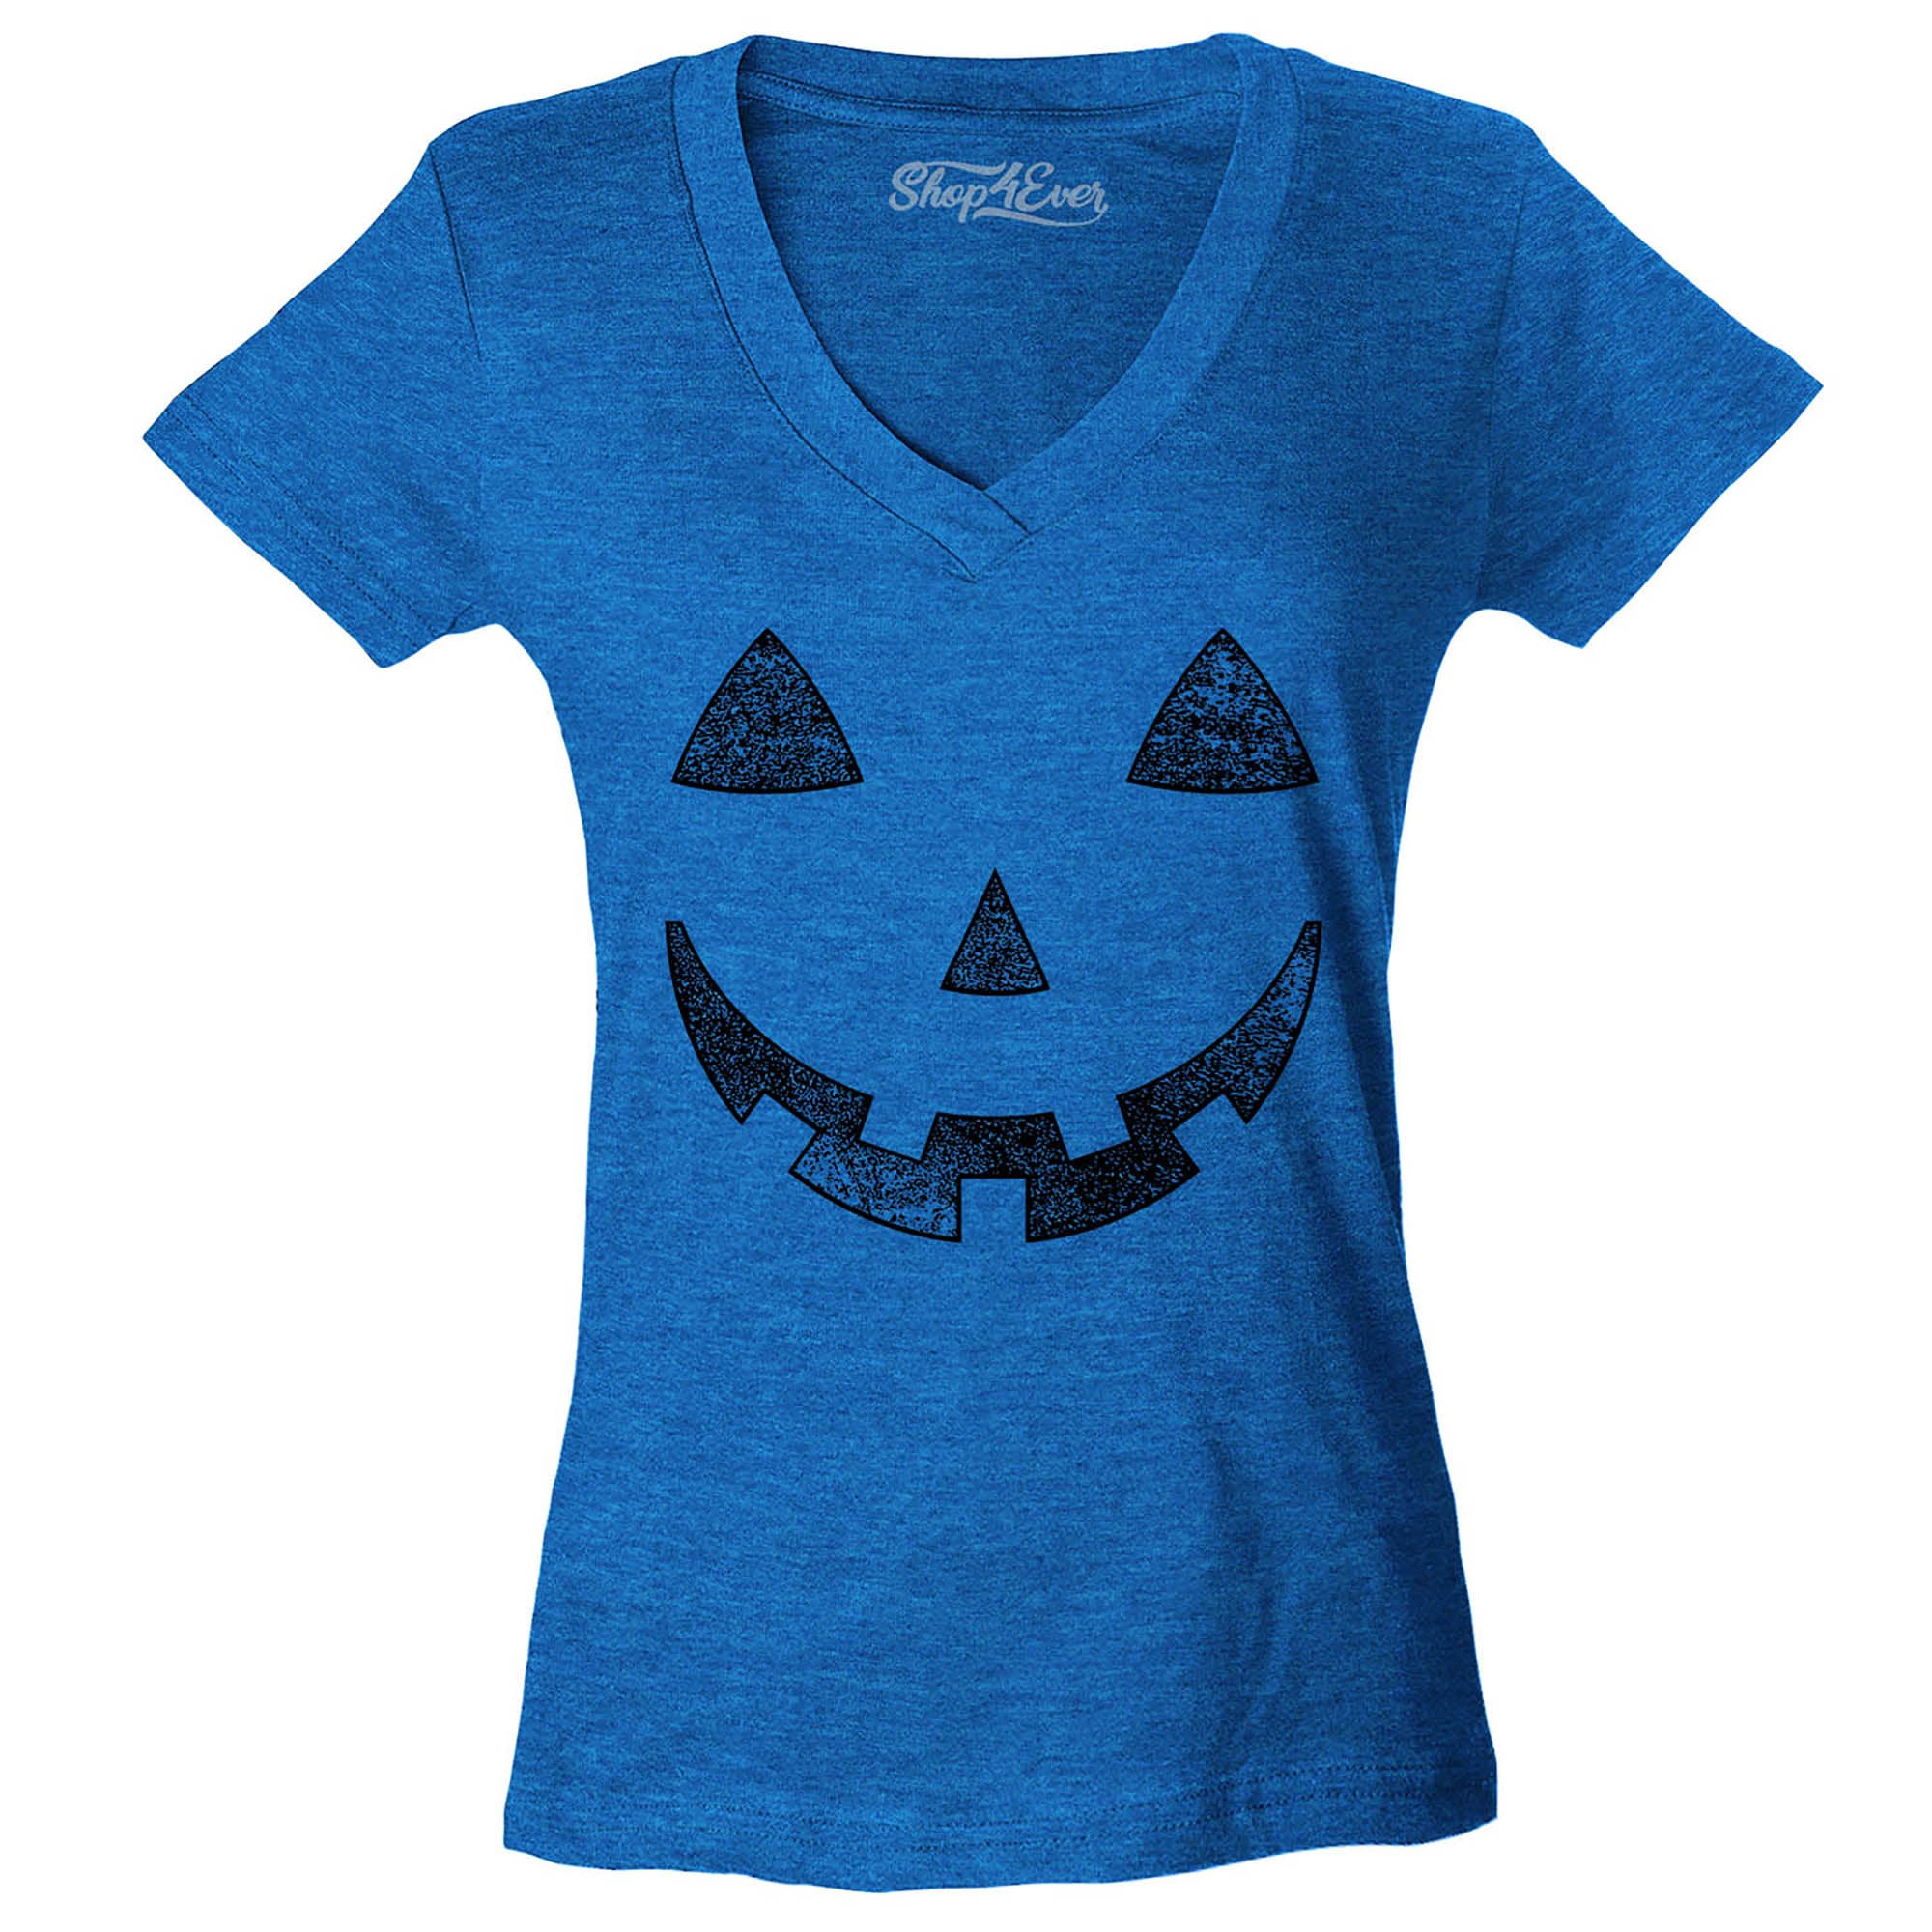 ack O' Lantern Halloween Pumpkin Costume Women's V-Neck T-Shirt Slim Fit